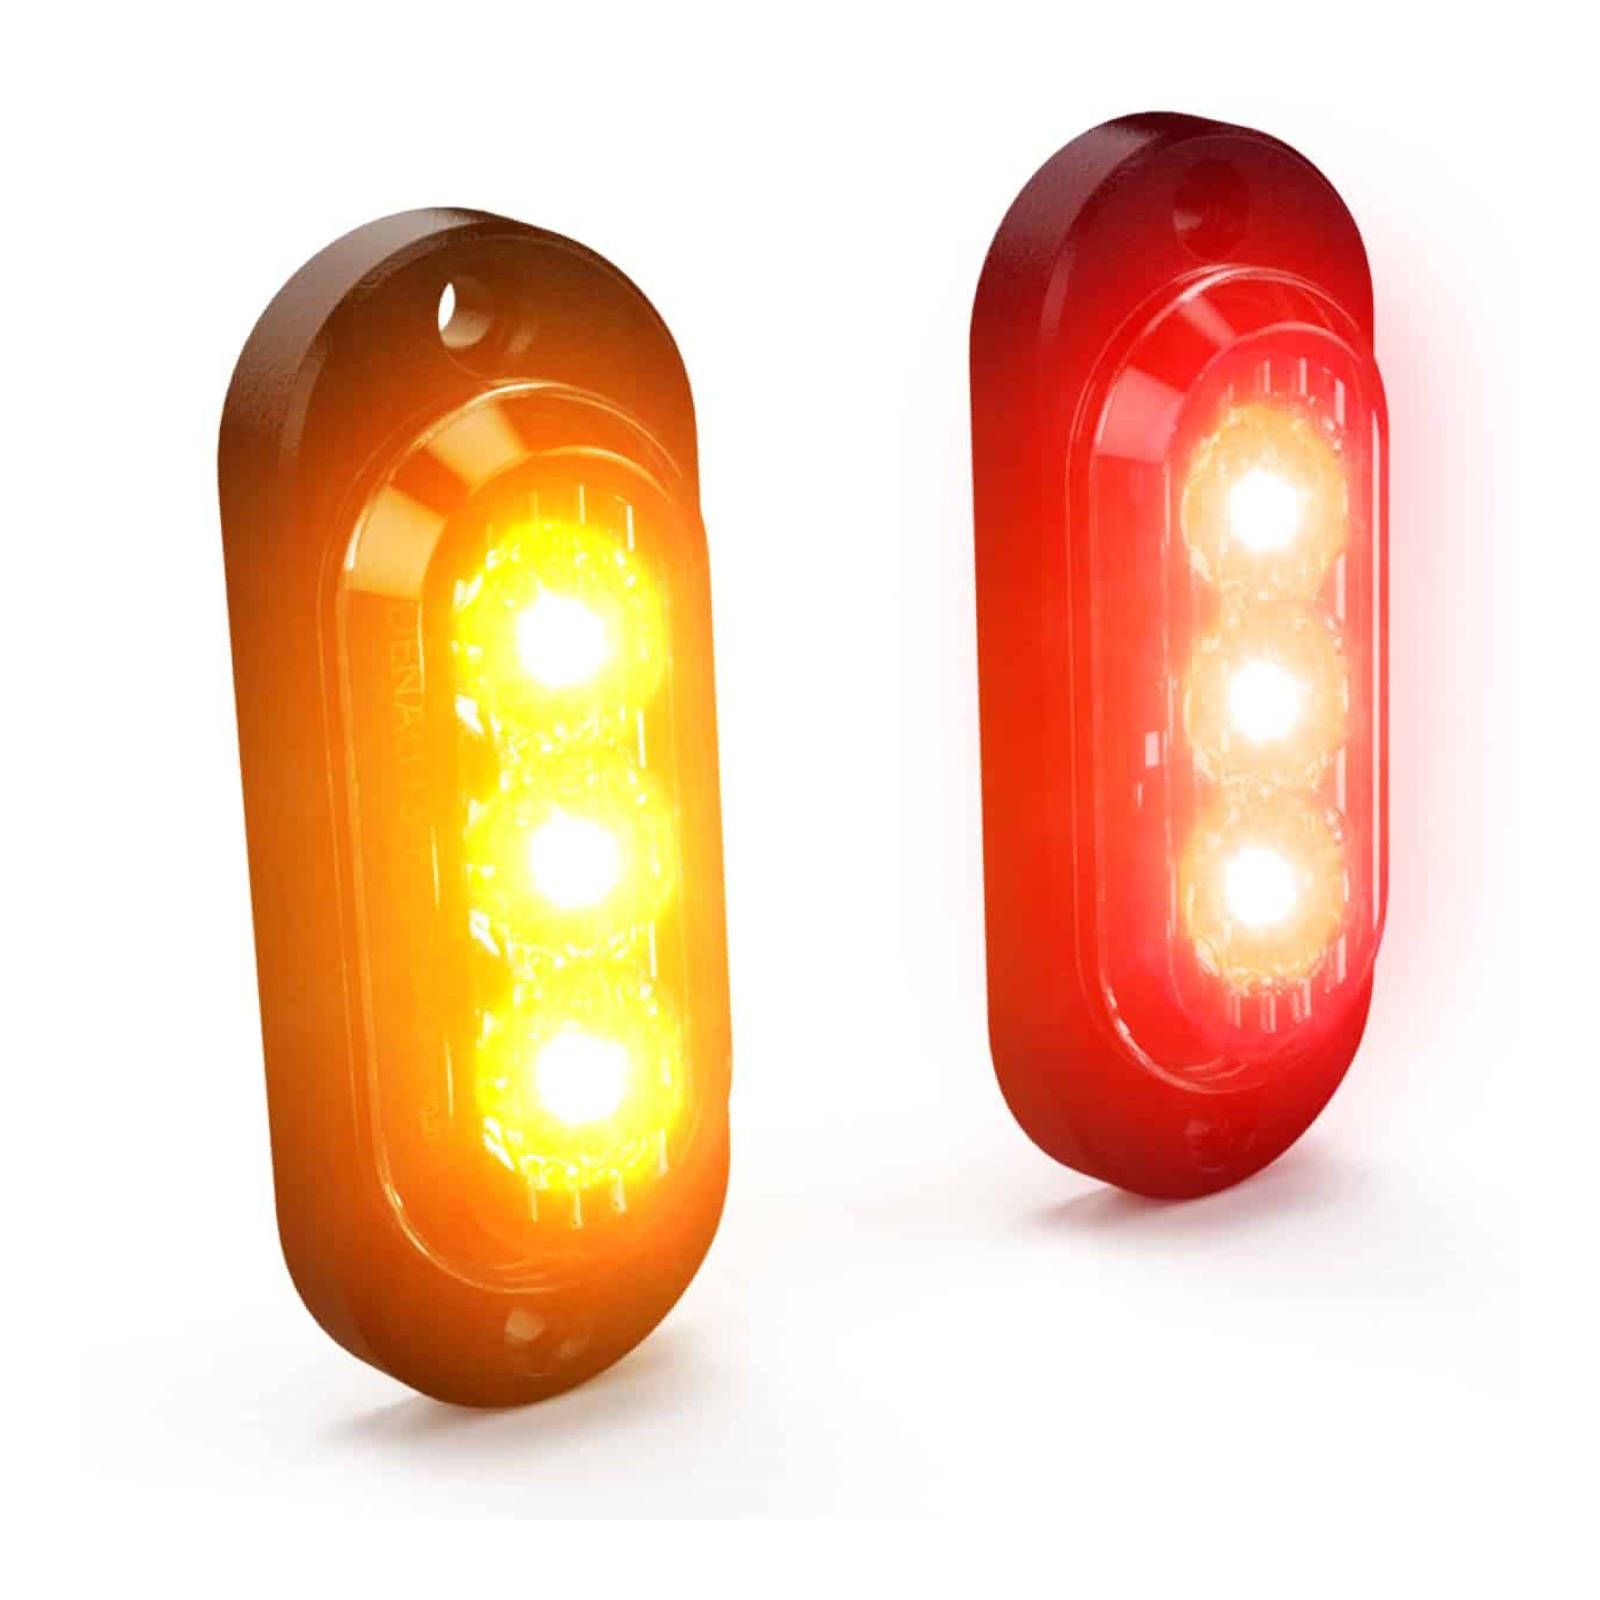 New DENALI T3 Rear Turn Signal / Brake Light Pods Red/Amber - Pair #DEDNLT310300